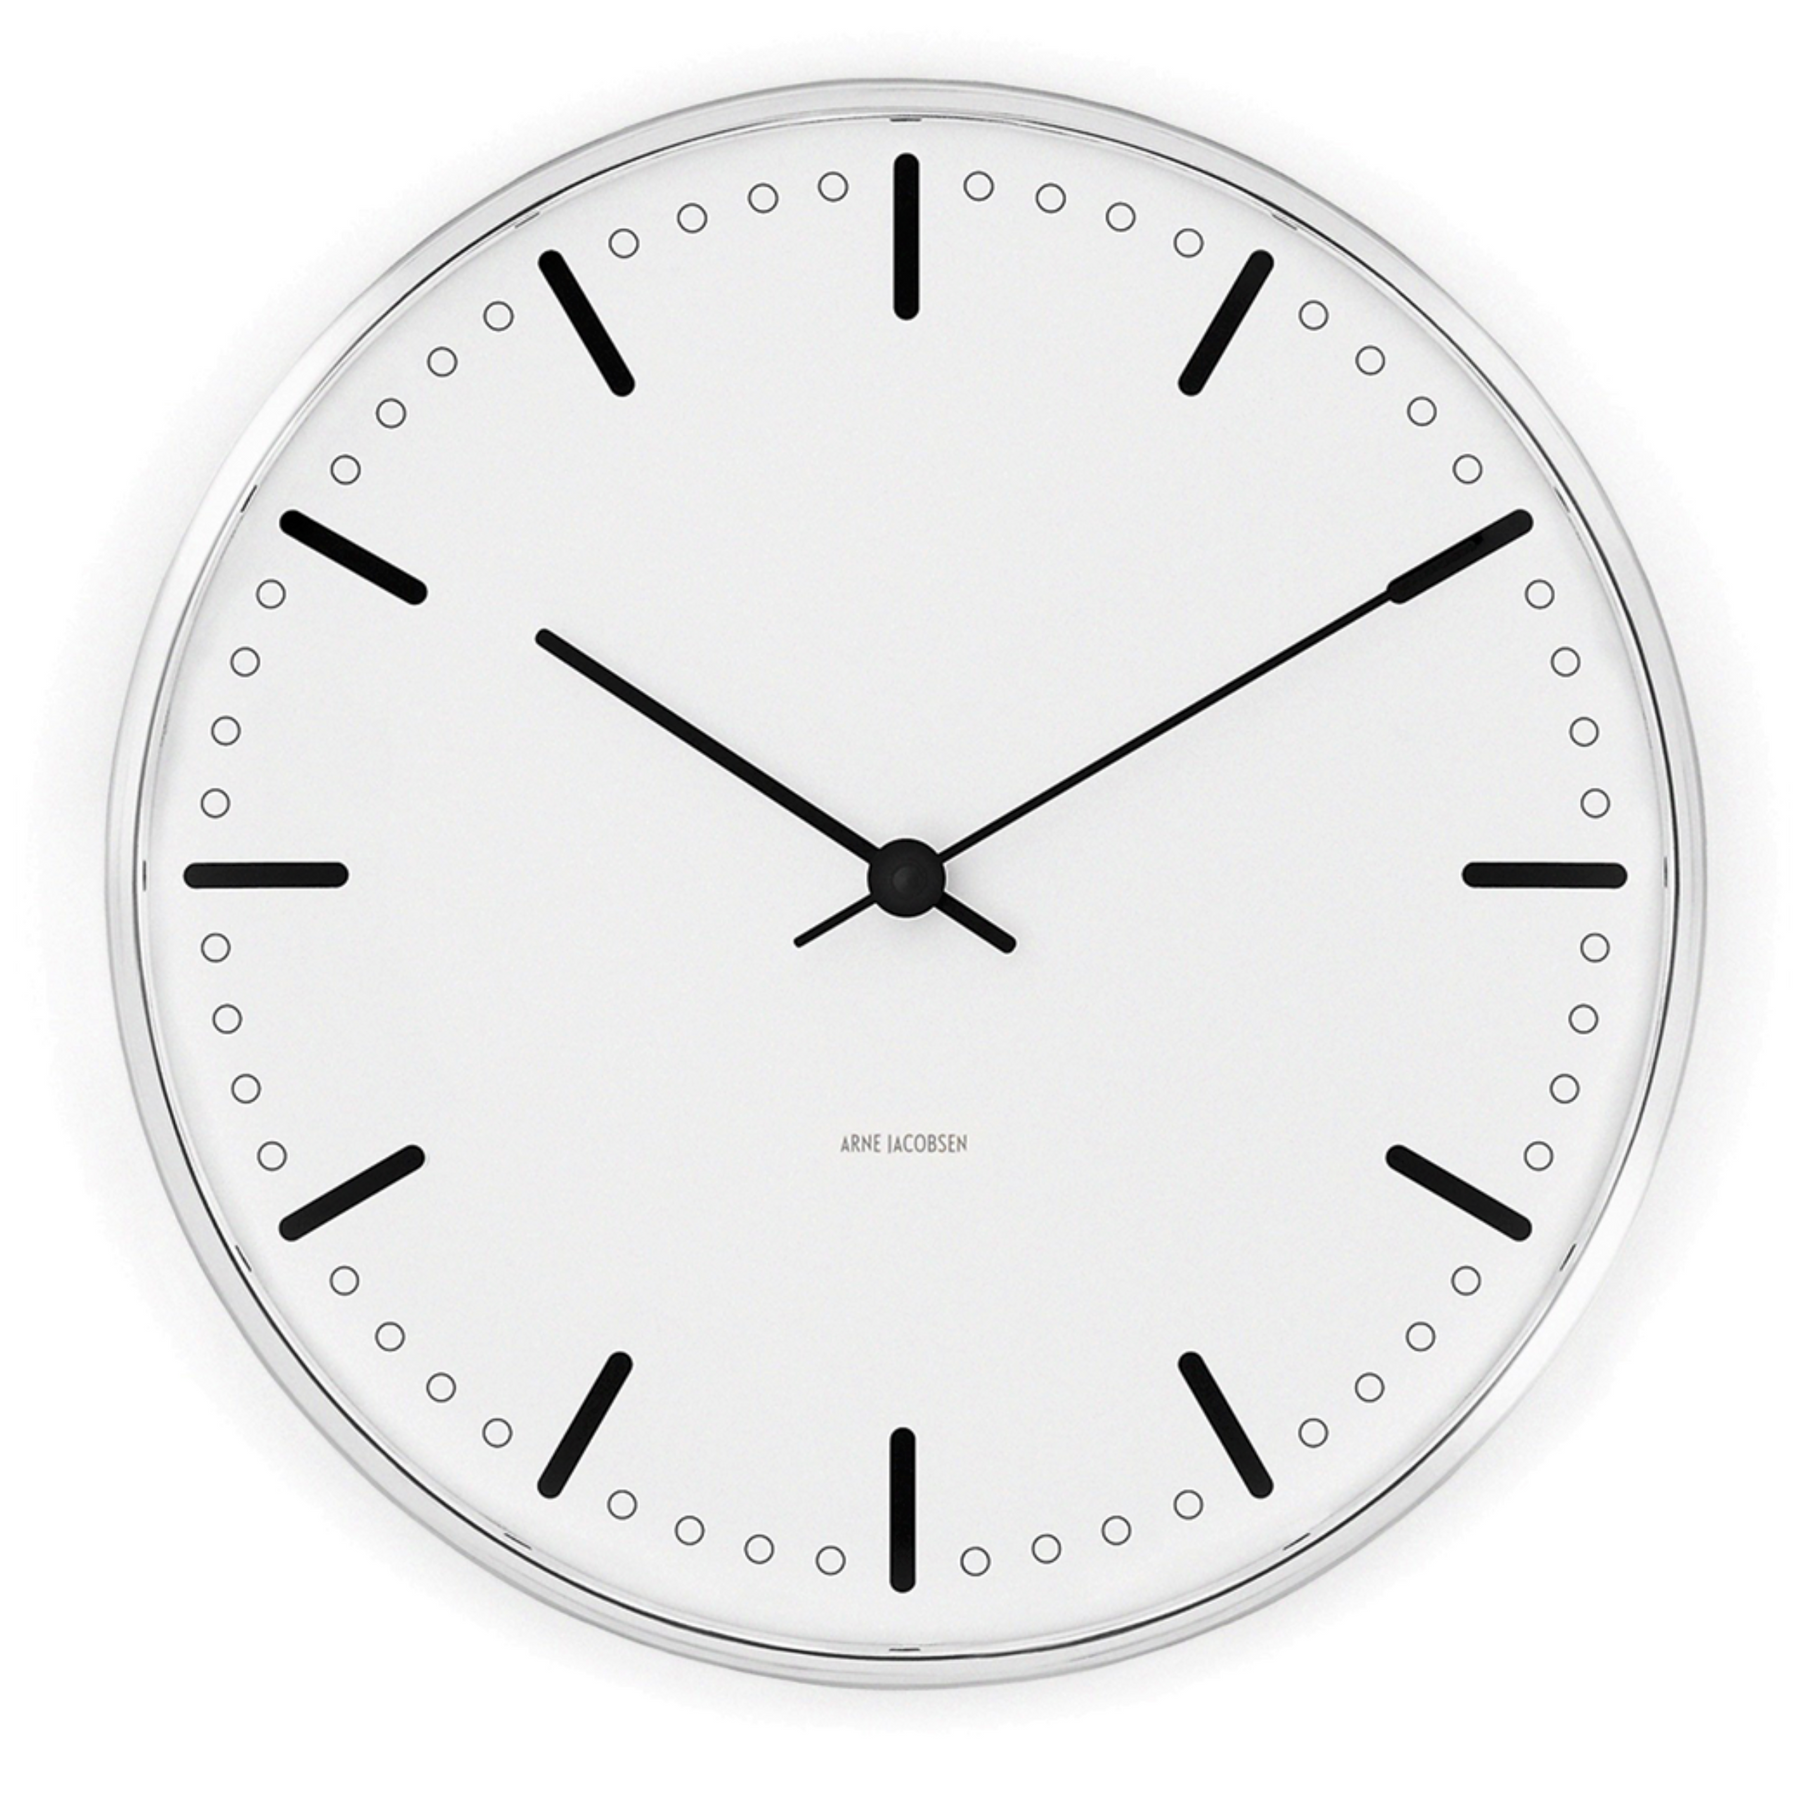 Rosendahl, Arne Jacobsen City Hall Wall Clock, Size, 8.3 in dia., Wall Clock,